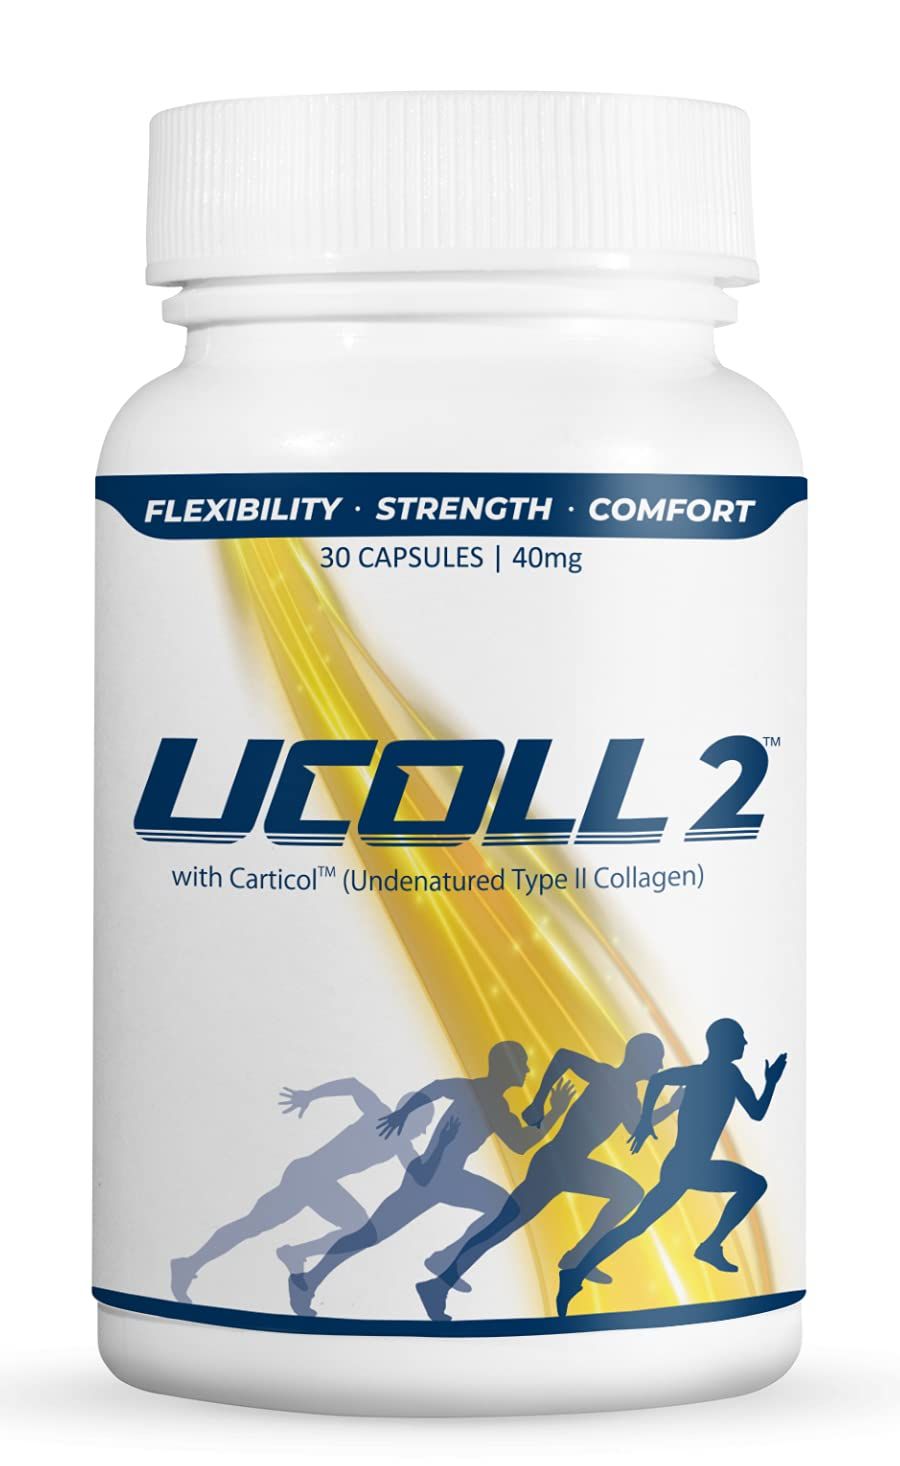 Ucoll 2 Undenatured Type 2 Collagen Joint Support Supplement Image